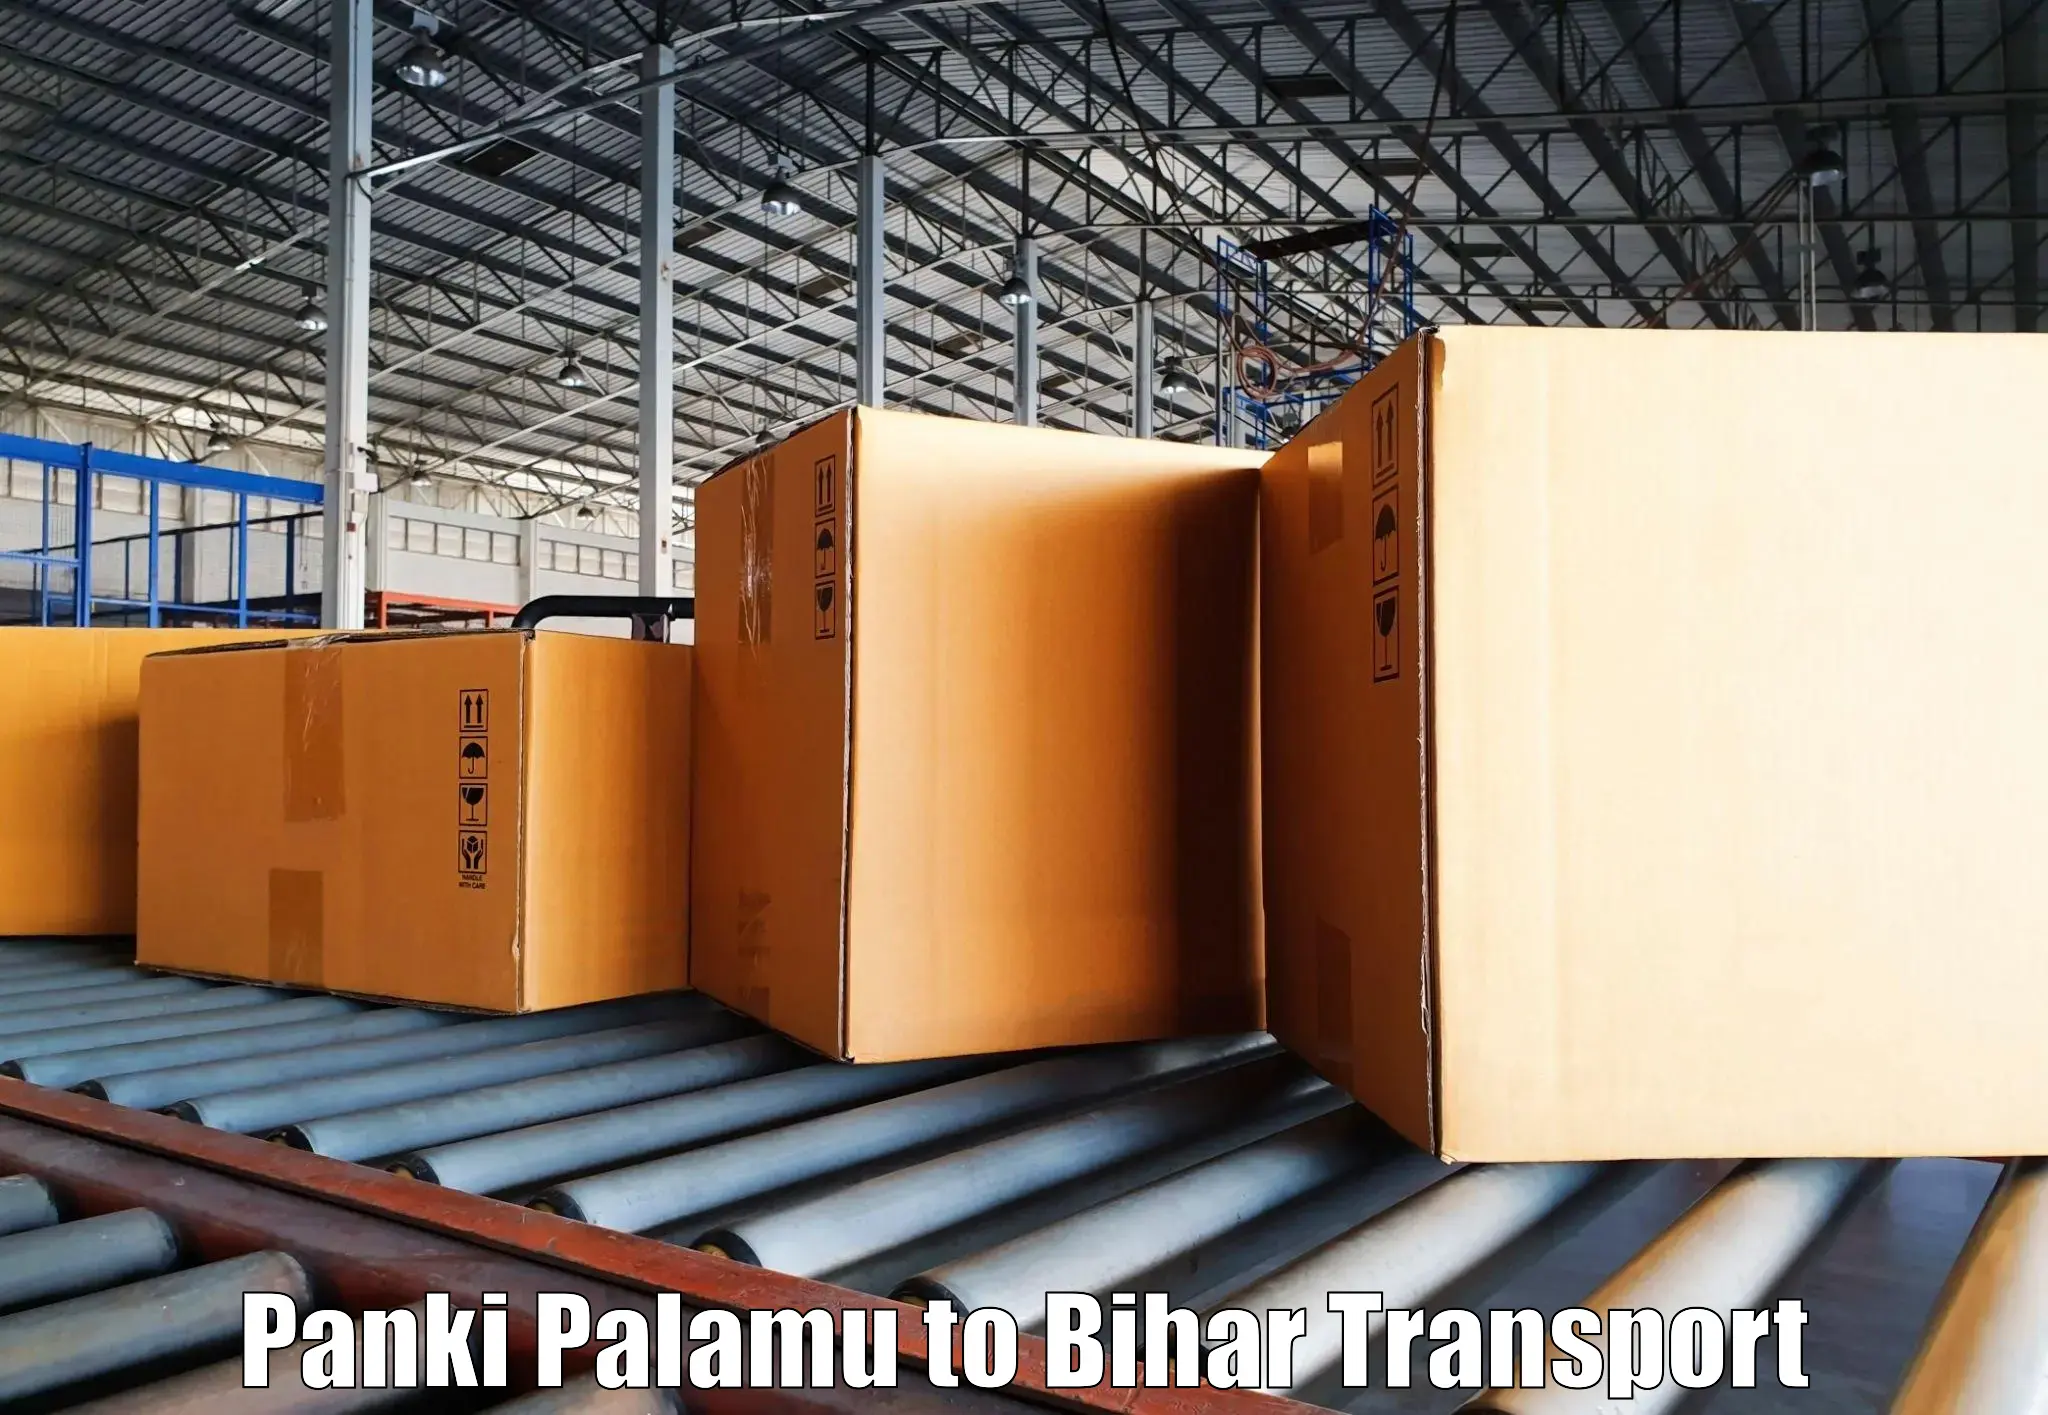 Online transport Panki Palamu to Biraul